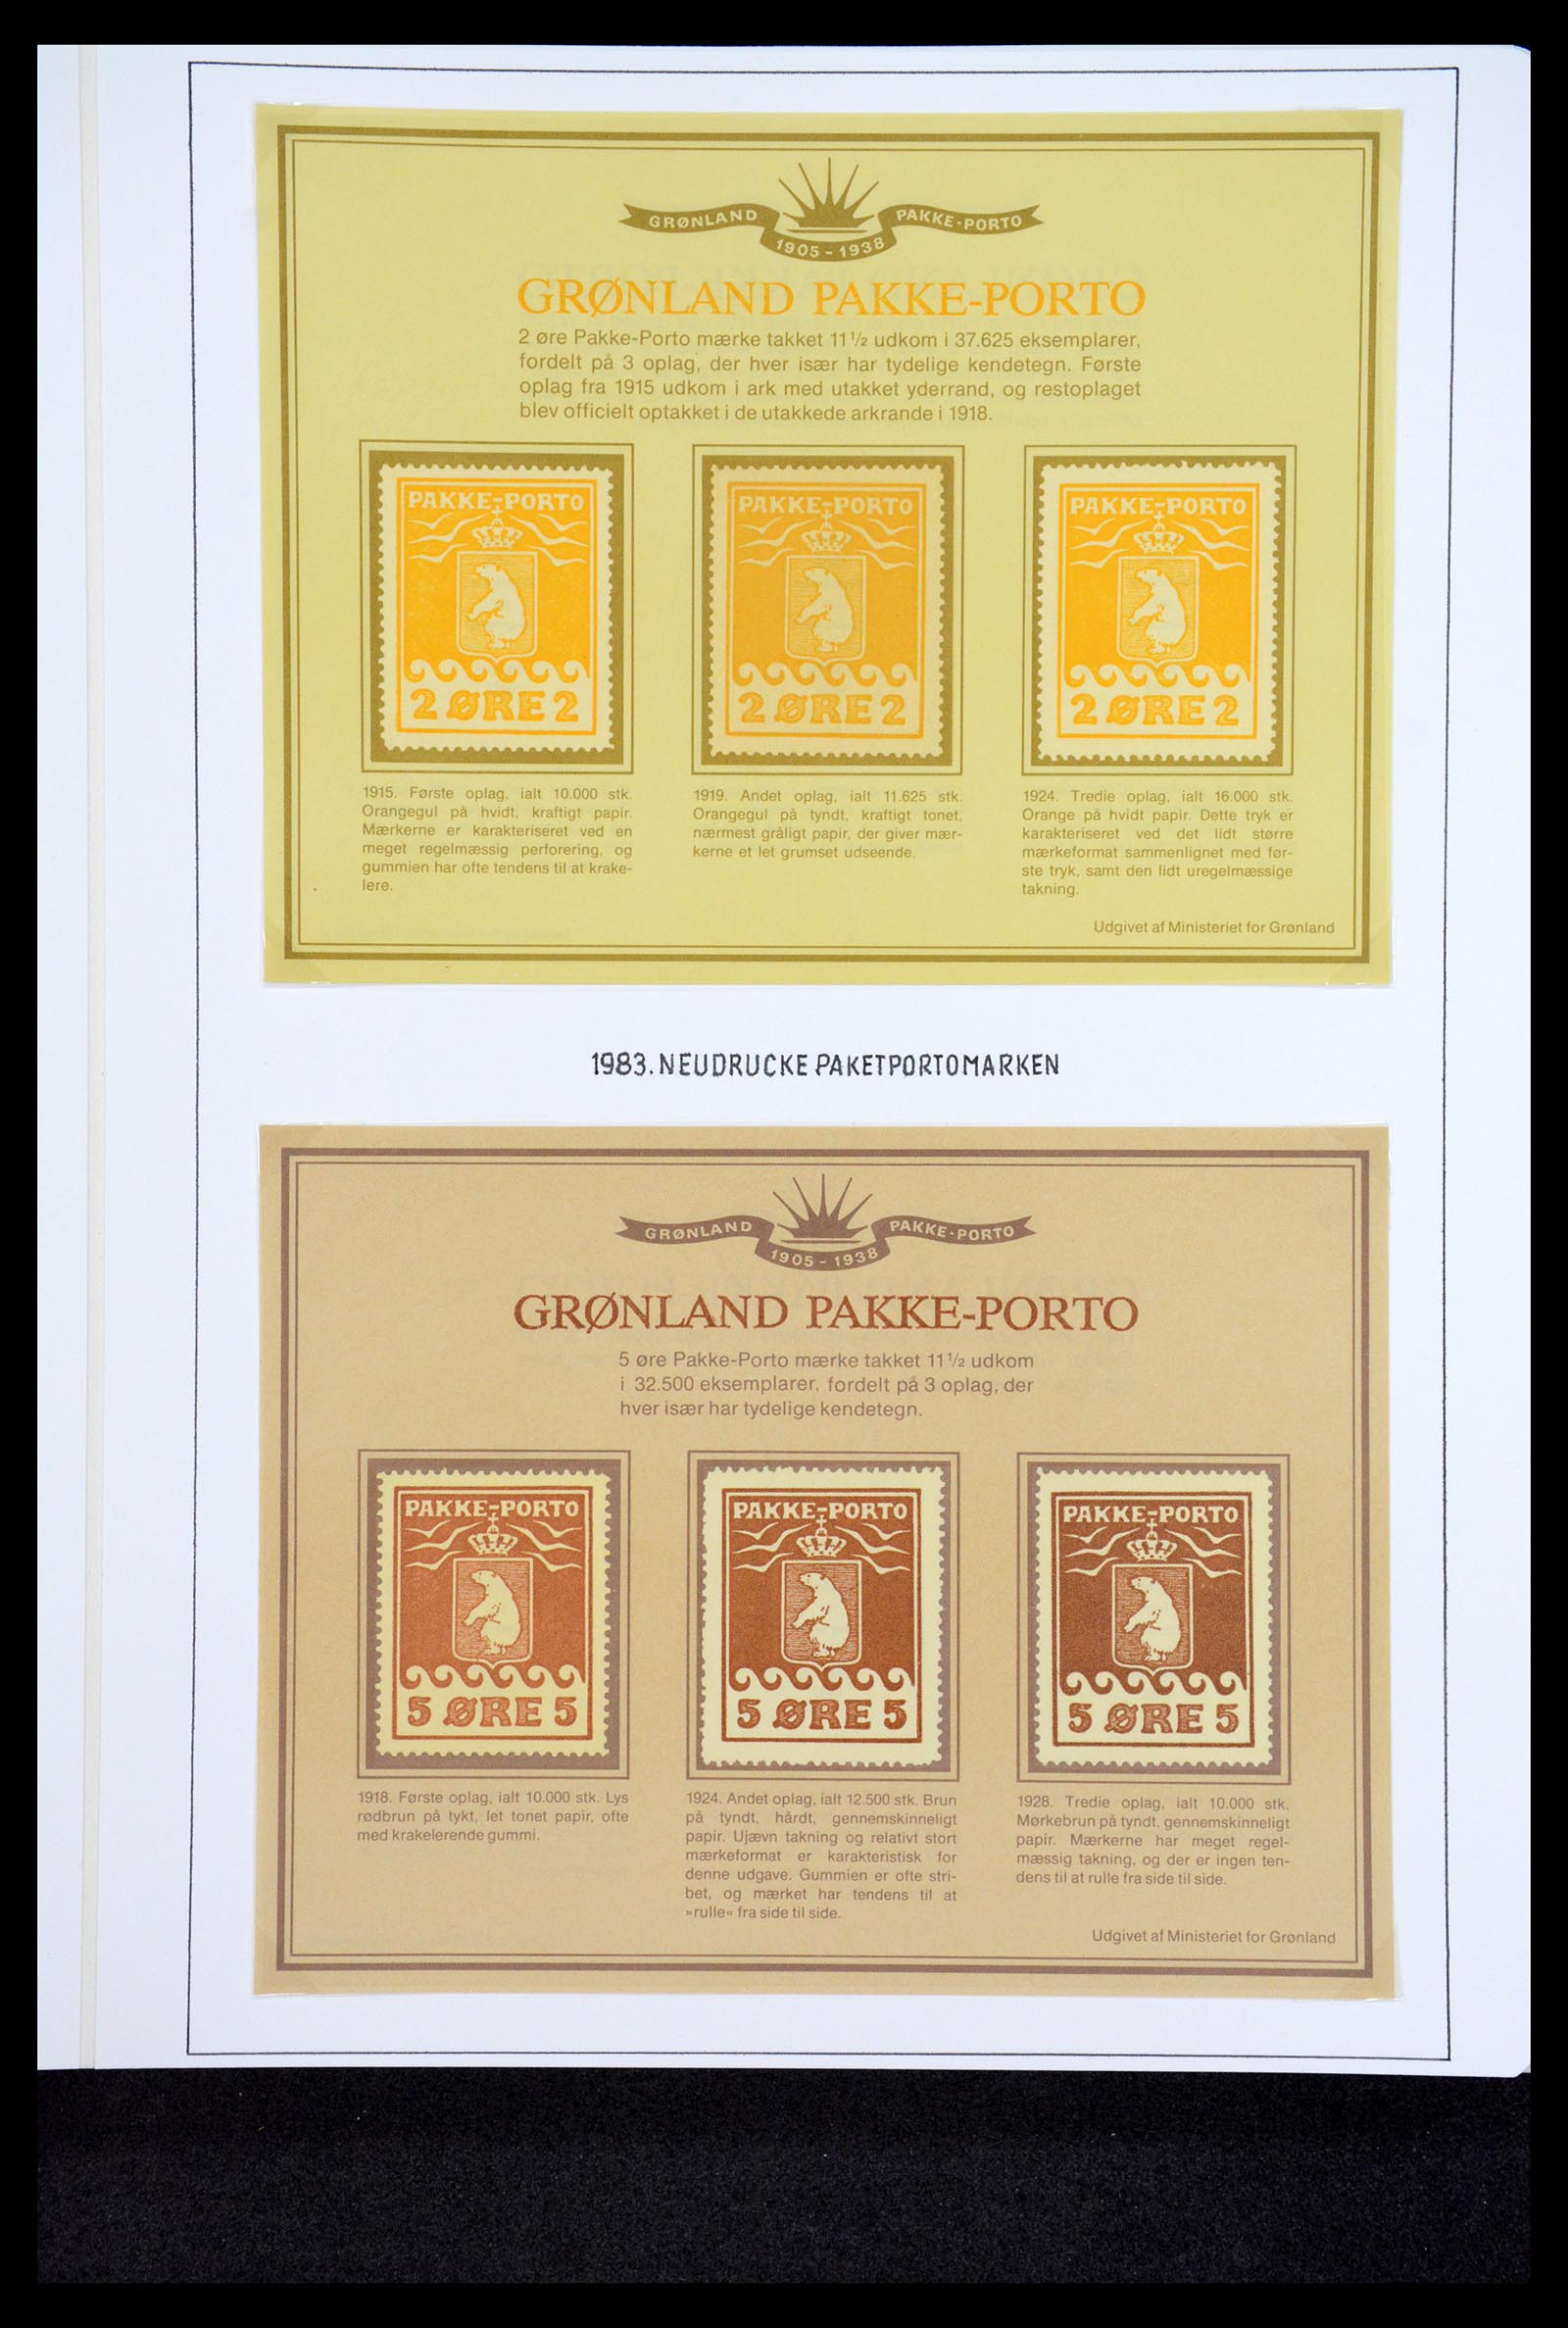 36748 012 - Postzegelverzameling 36748 Groenland pakke-porto 1905-1930.